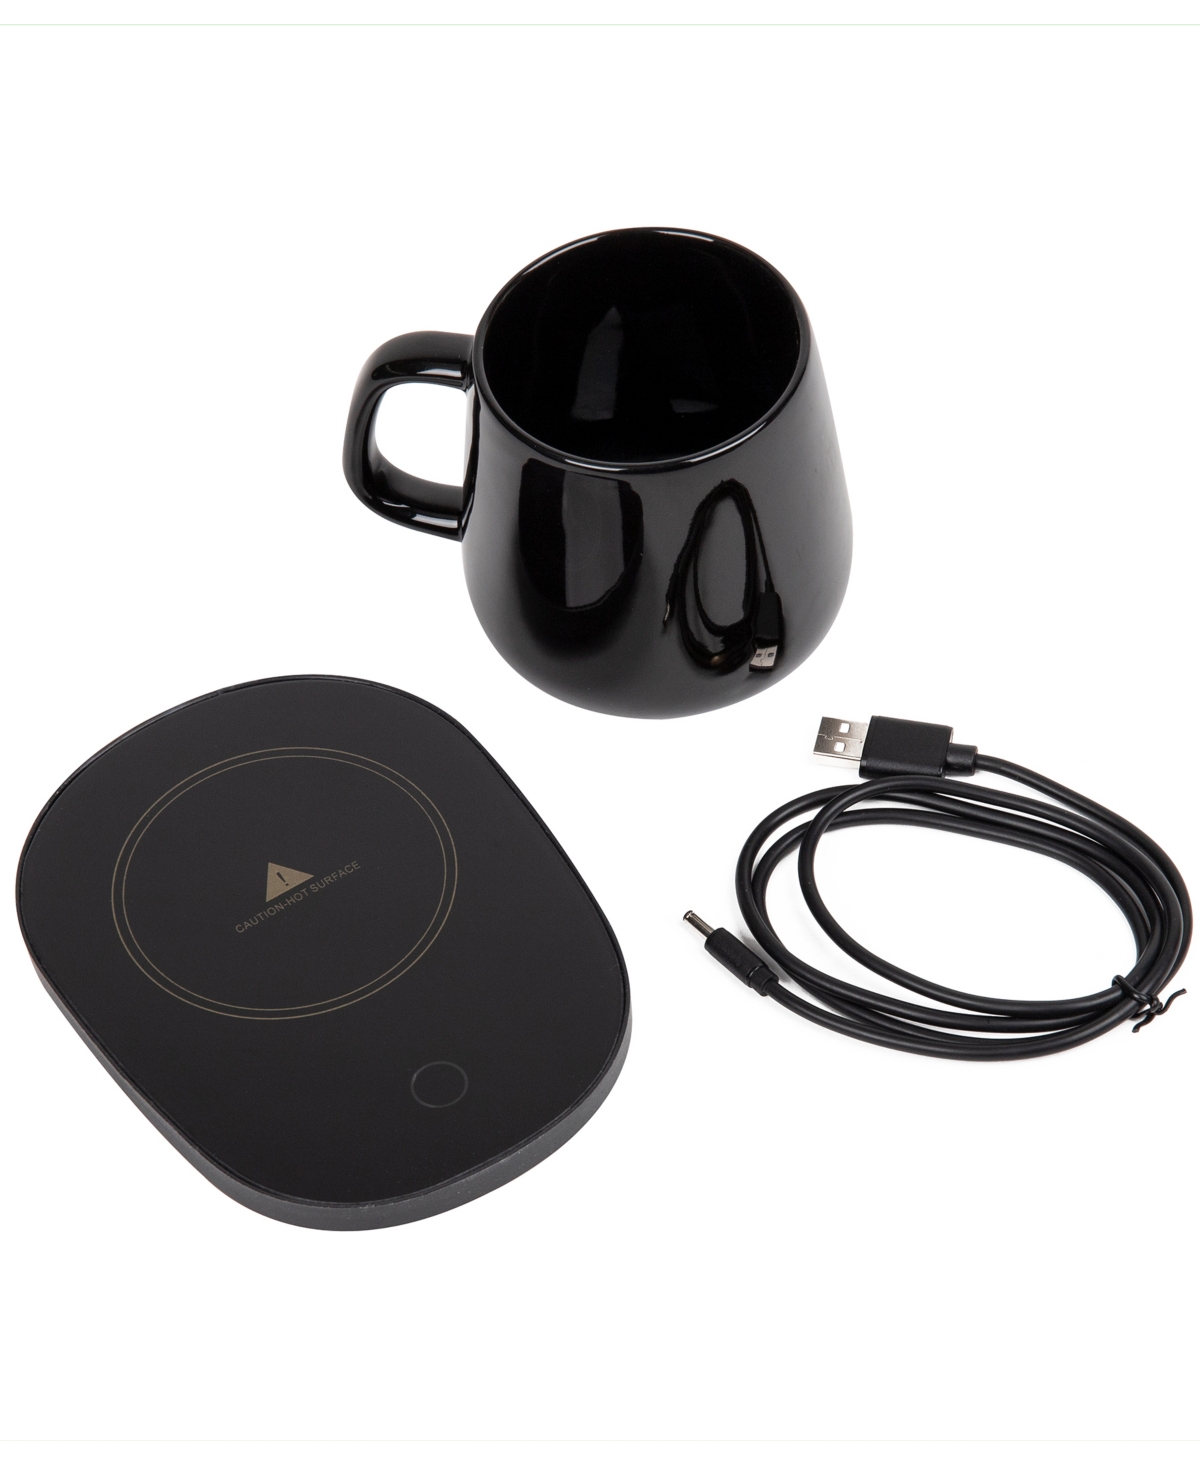 Mind Reader Usb Coffee Mug Warmer For Desk, Tea Cup Warmer, Electric Warming Plate For Drinks Beverage Water Coc In Black